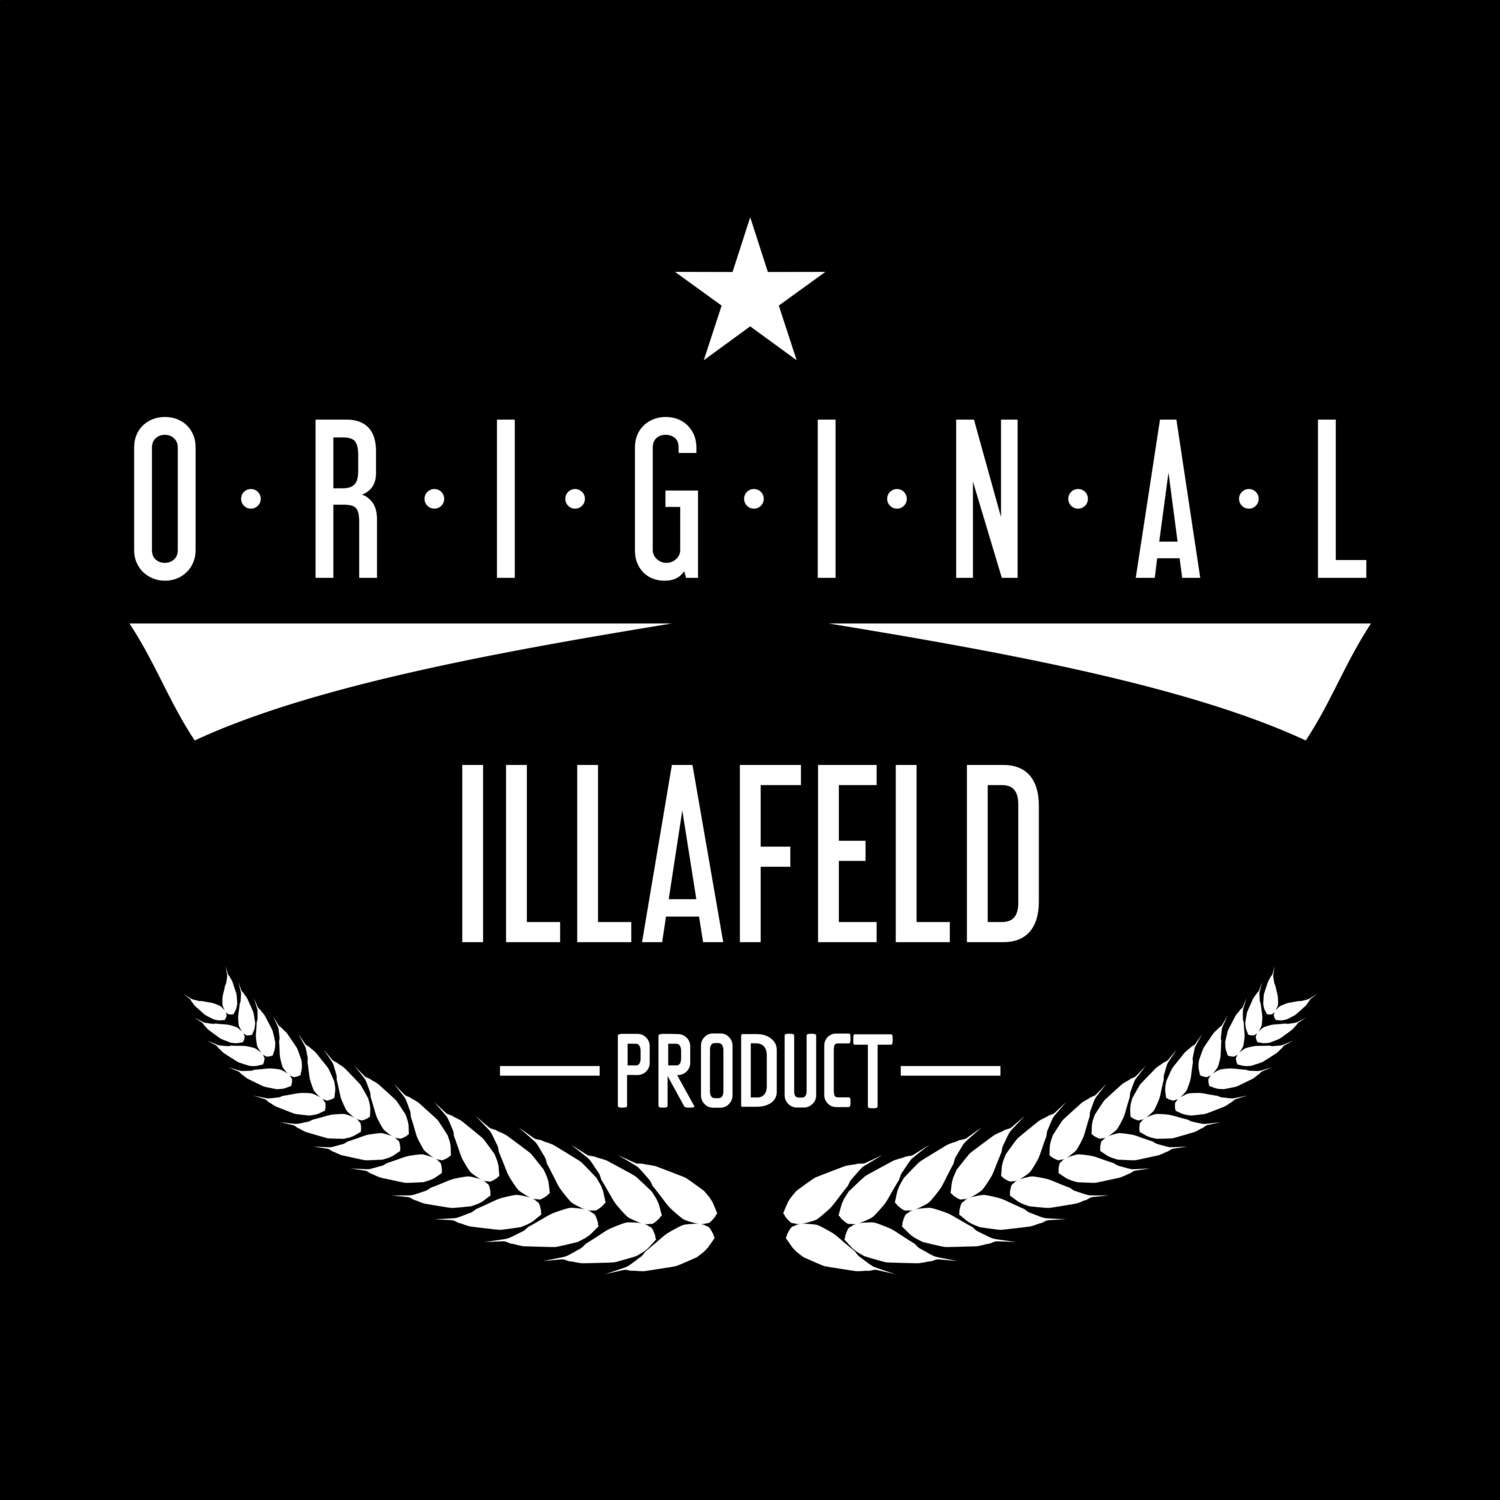 Illafeld T-Shirt »Original Product«